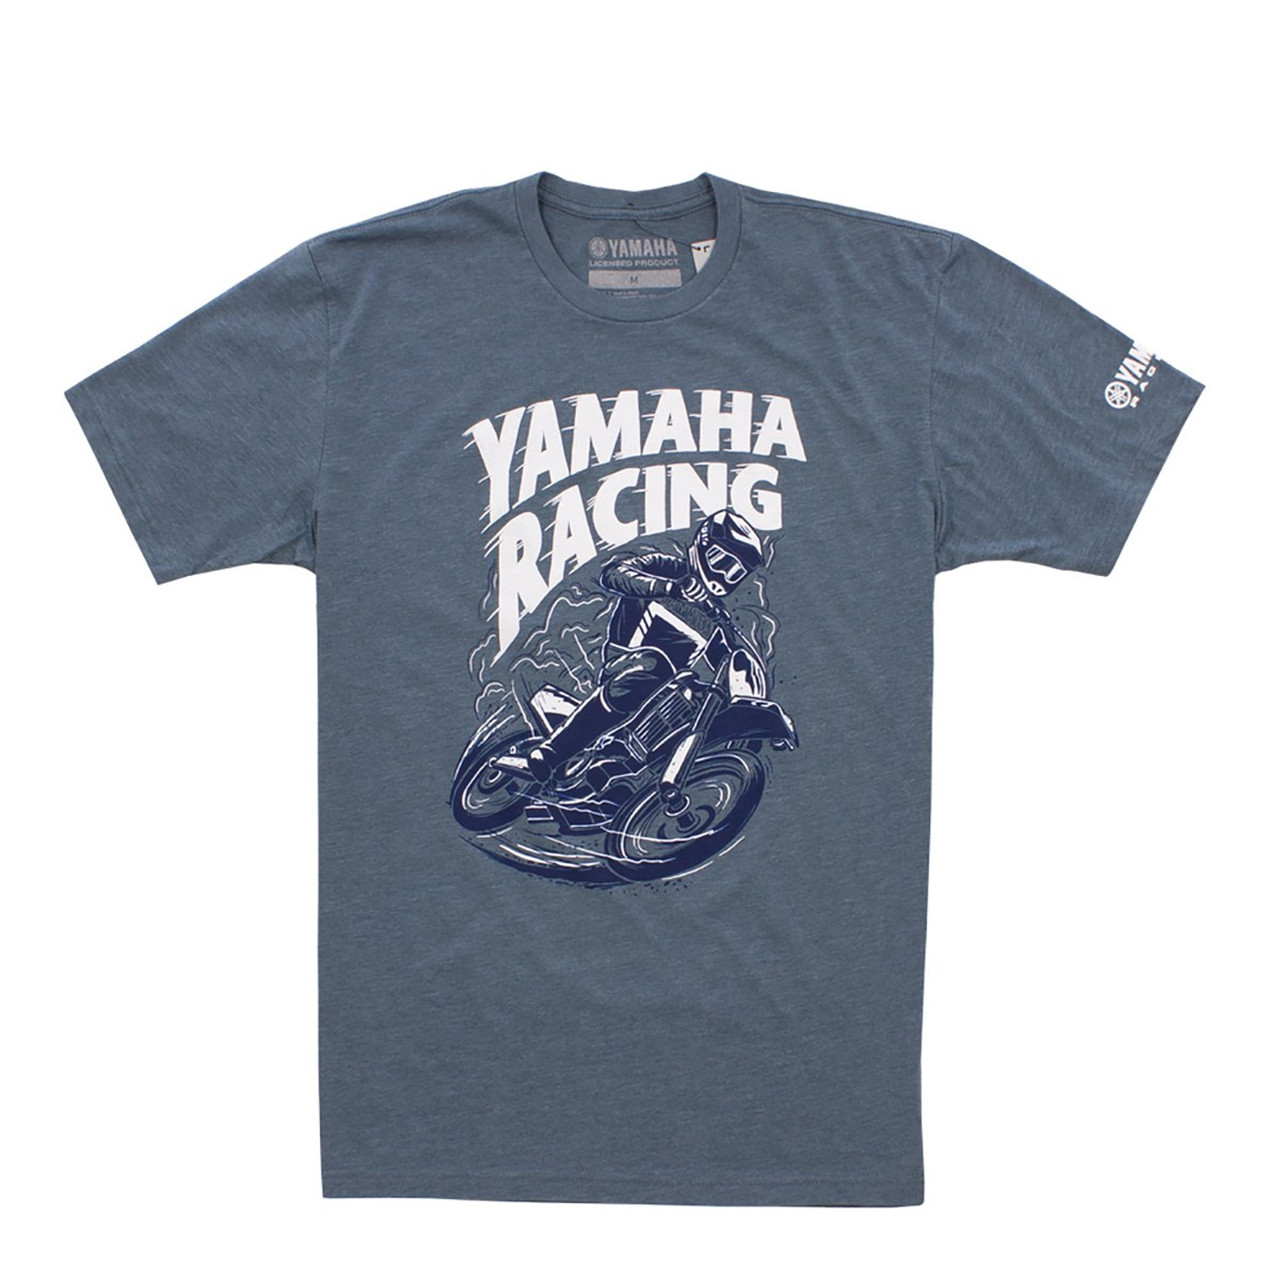 Yamaha New OEM Branded Blue Racing Cycle Short Sleeve Tee Shirt, VDF-21TYR-GY-MD